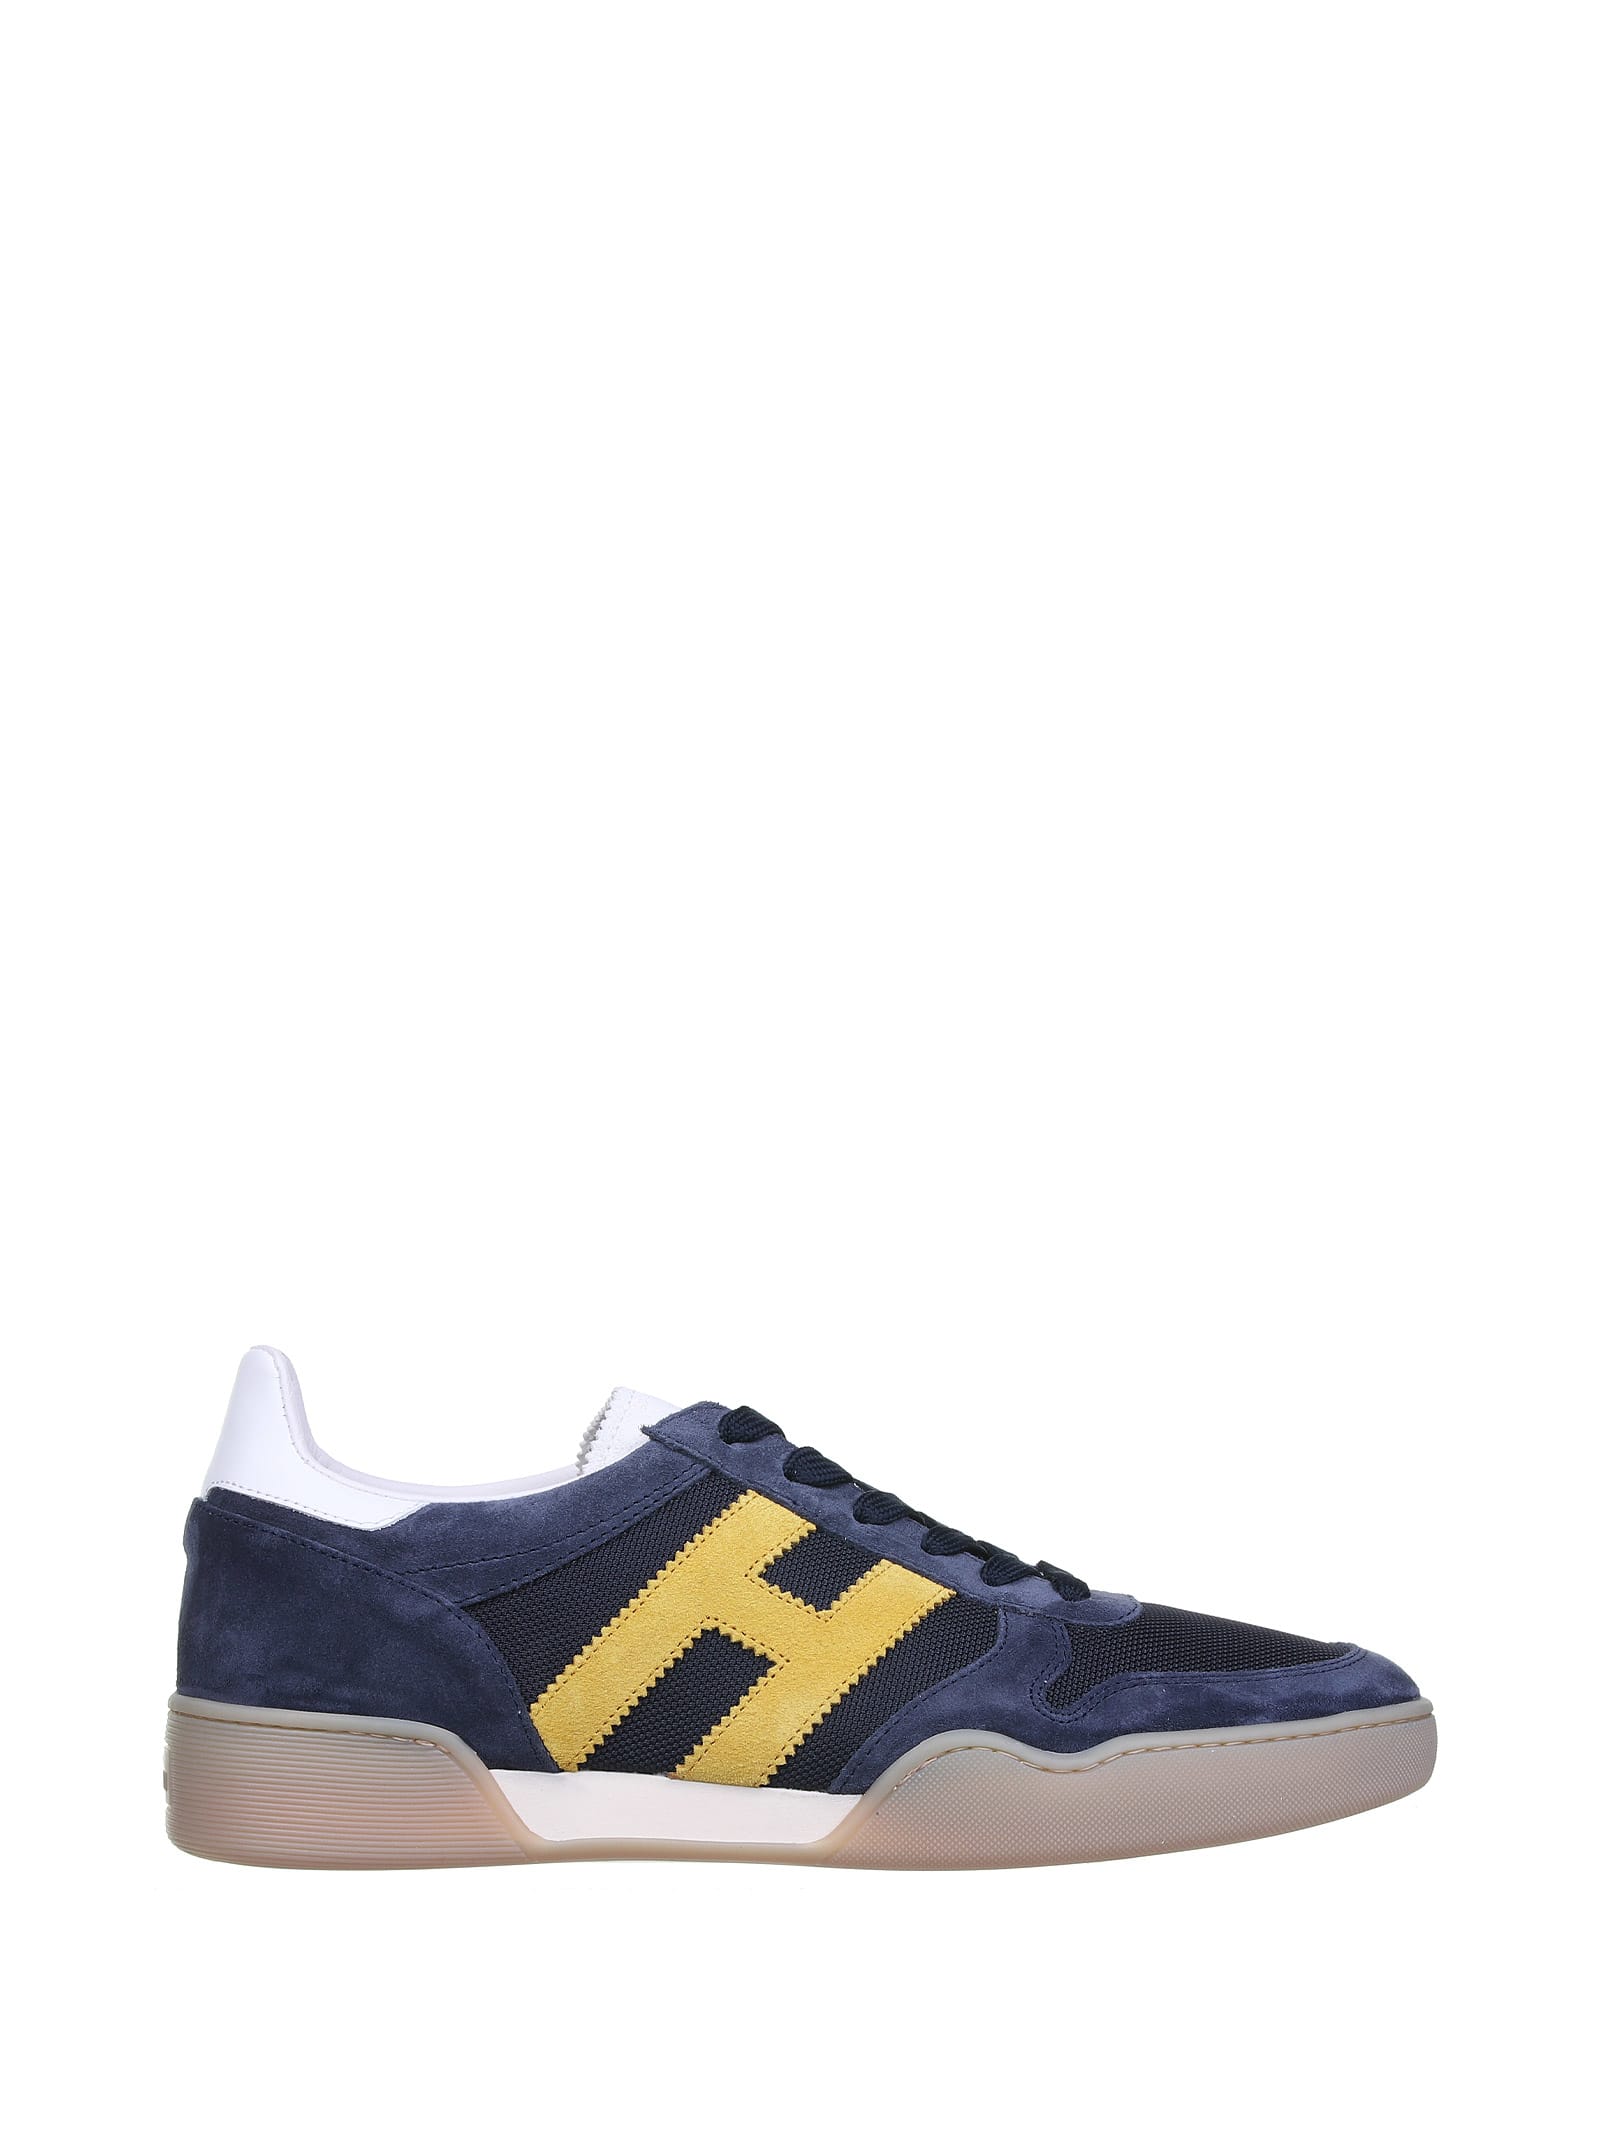 Hogan Hogan H357 Sneaker